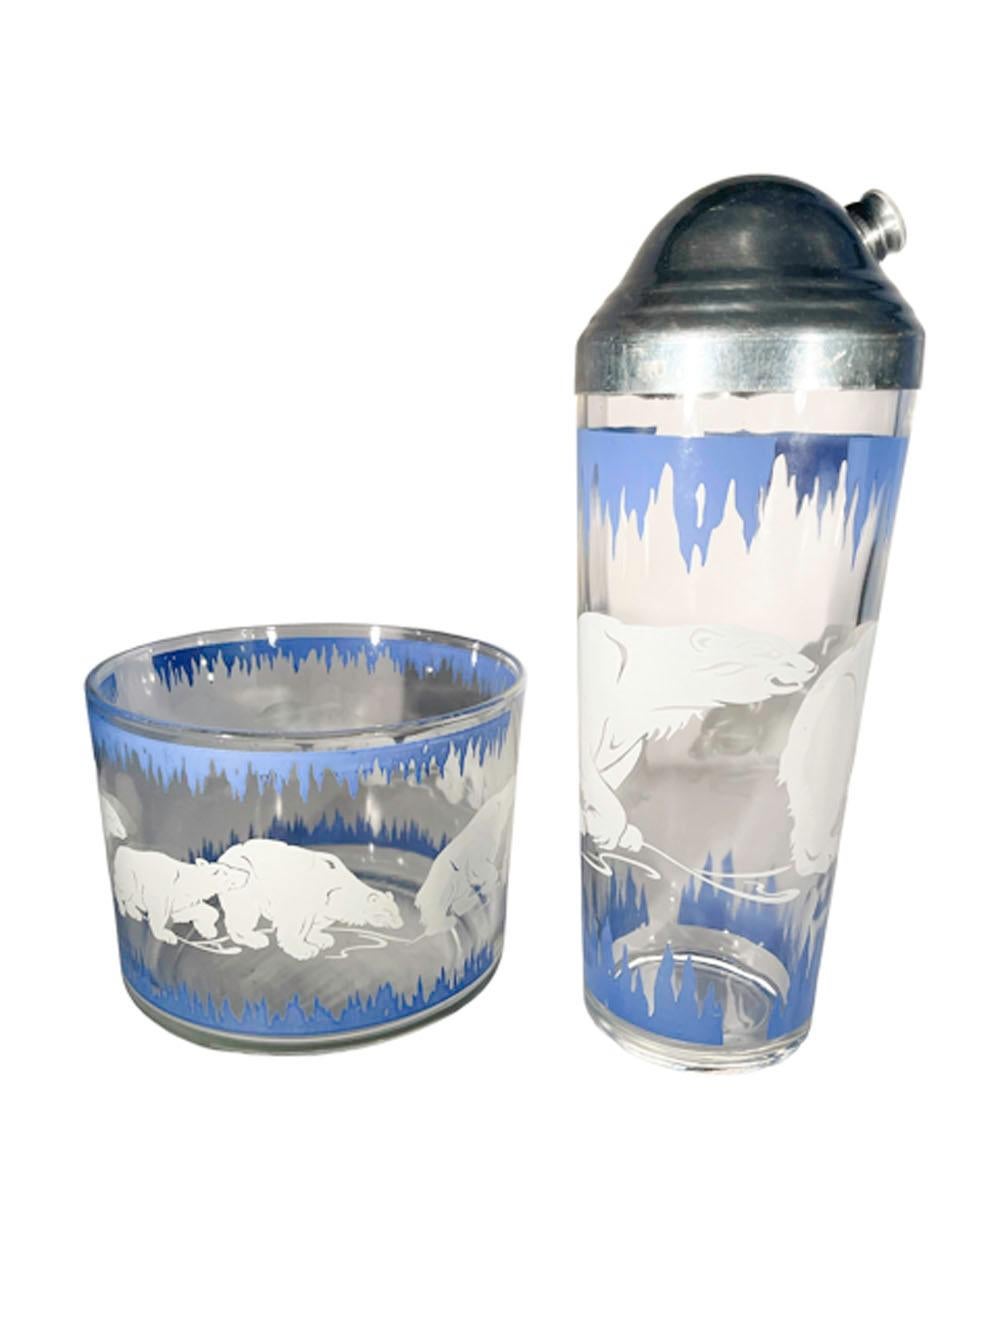 American Art Deco Polar Bear Cocktail Set, Hazel-Atlas, Shaker, Ice Bowl & 14 Glasses For Sale